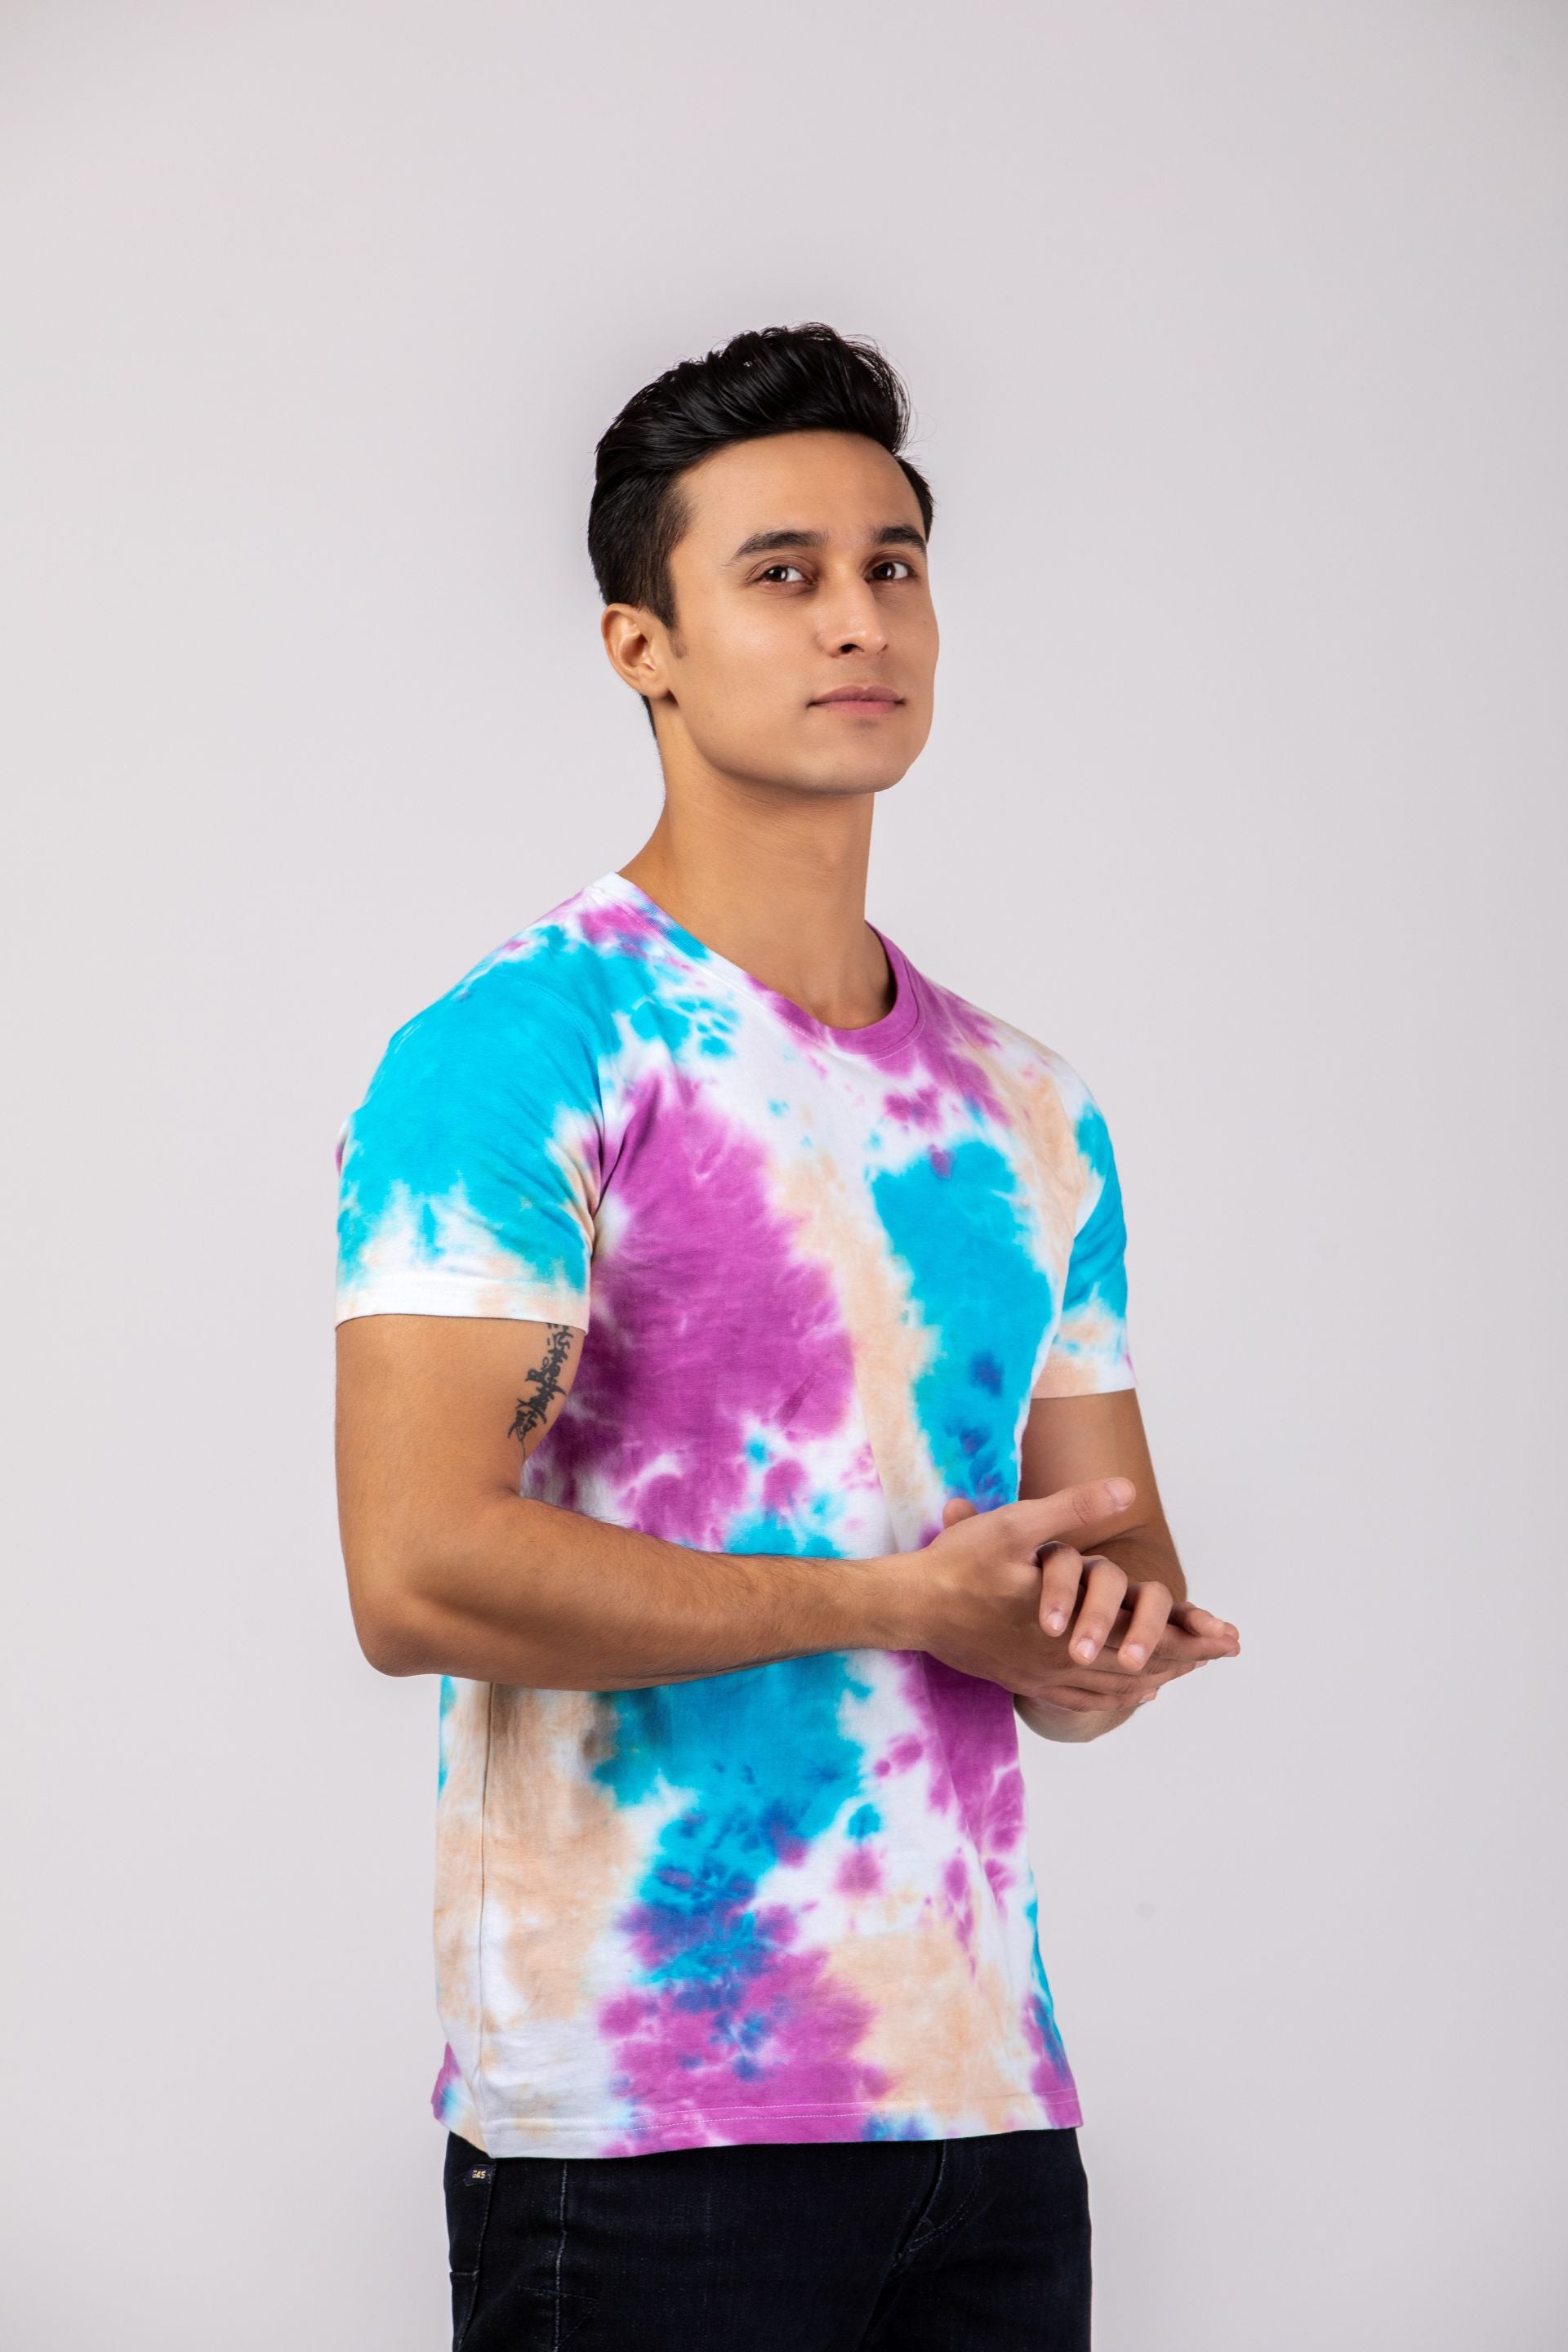 Firangi Yarn Handmade Cotton Tie-Dye Ombre Colored T-shirt